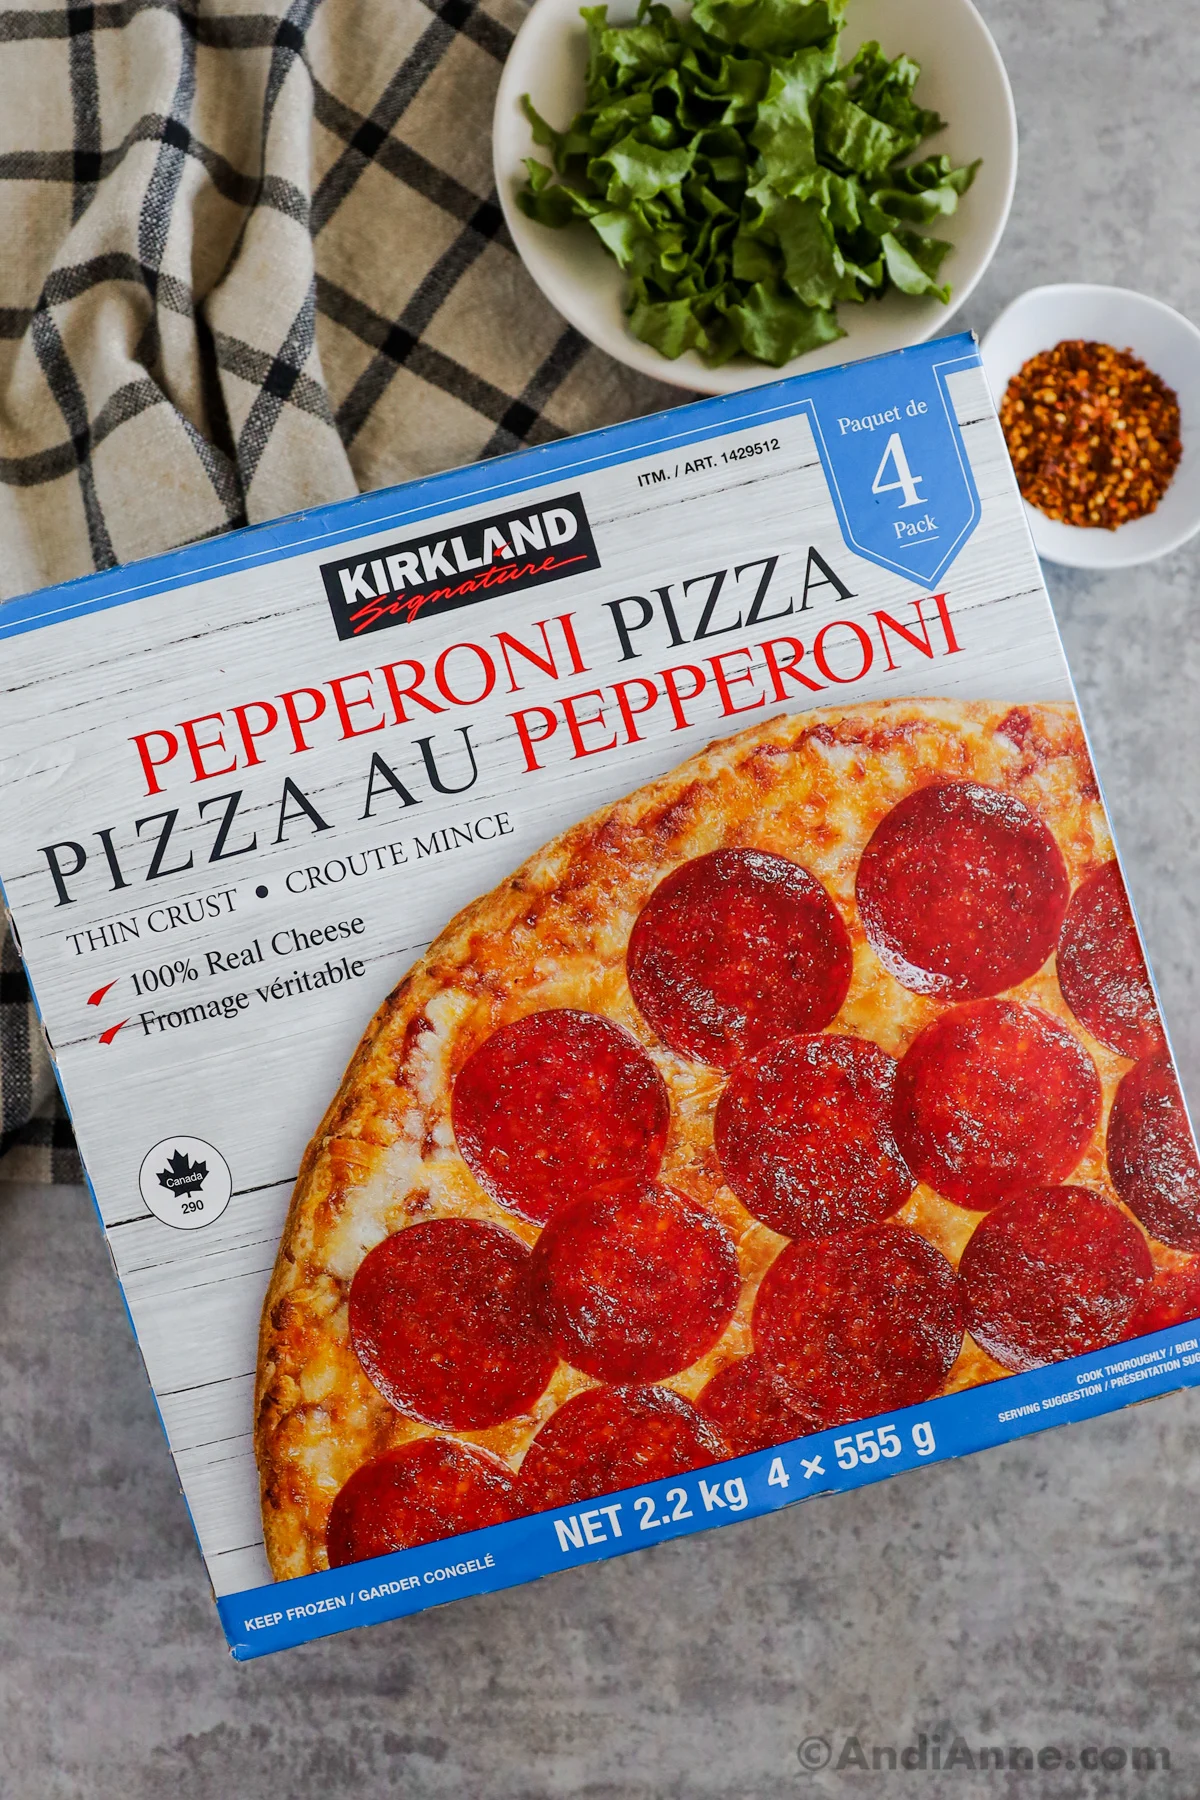 https://andianne.com/wp-content/uploads/2023/03/costco-pepperoni-pizza-03.jpg.webp